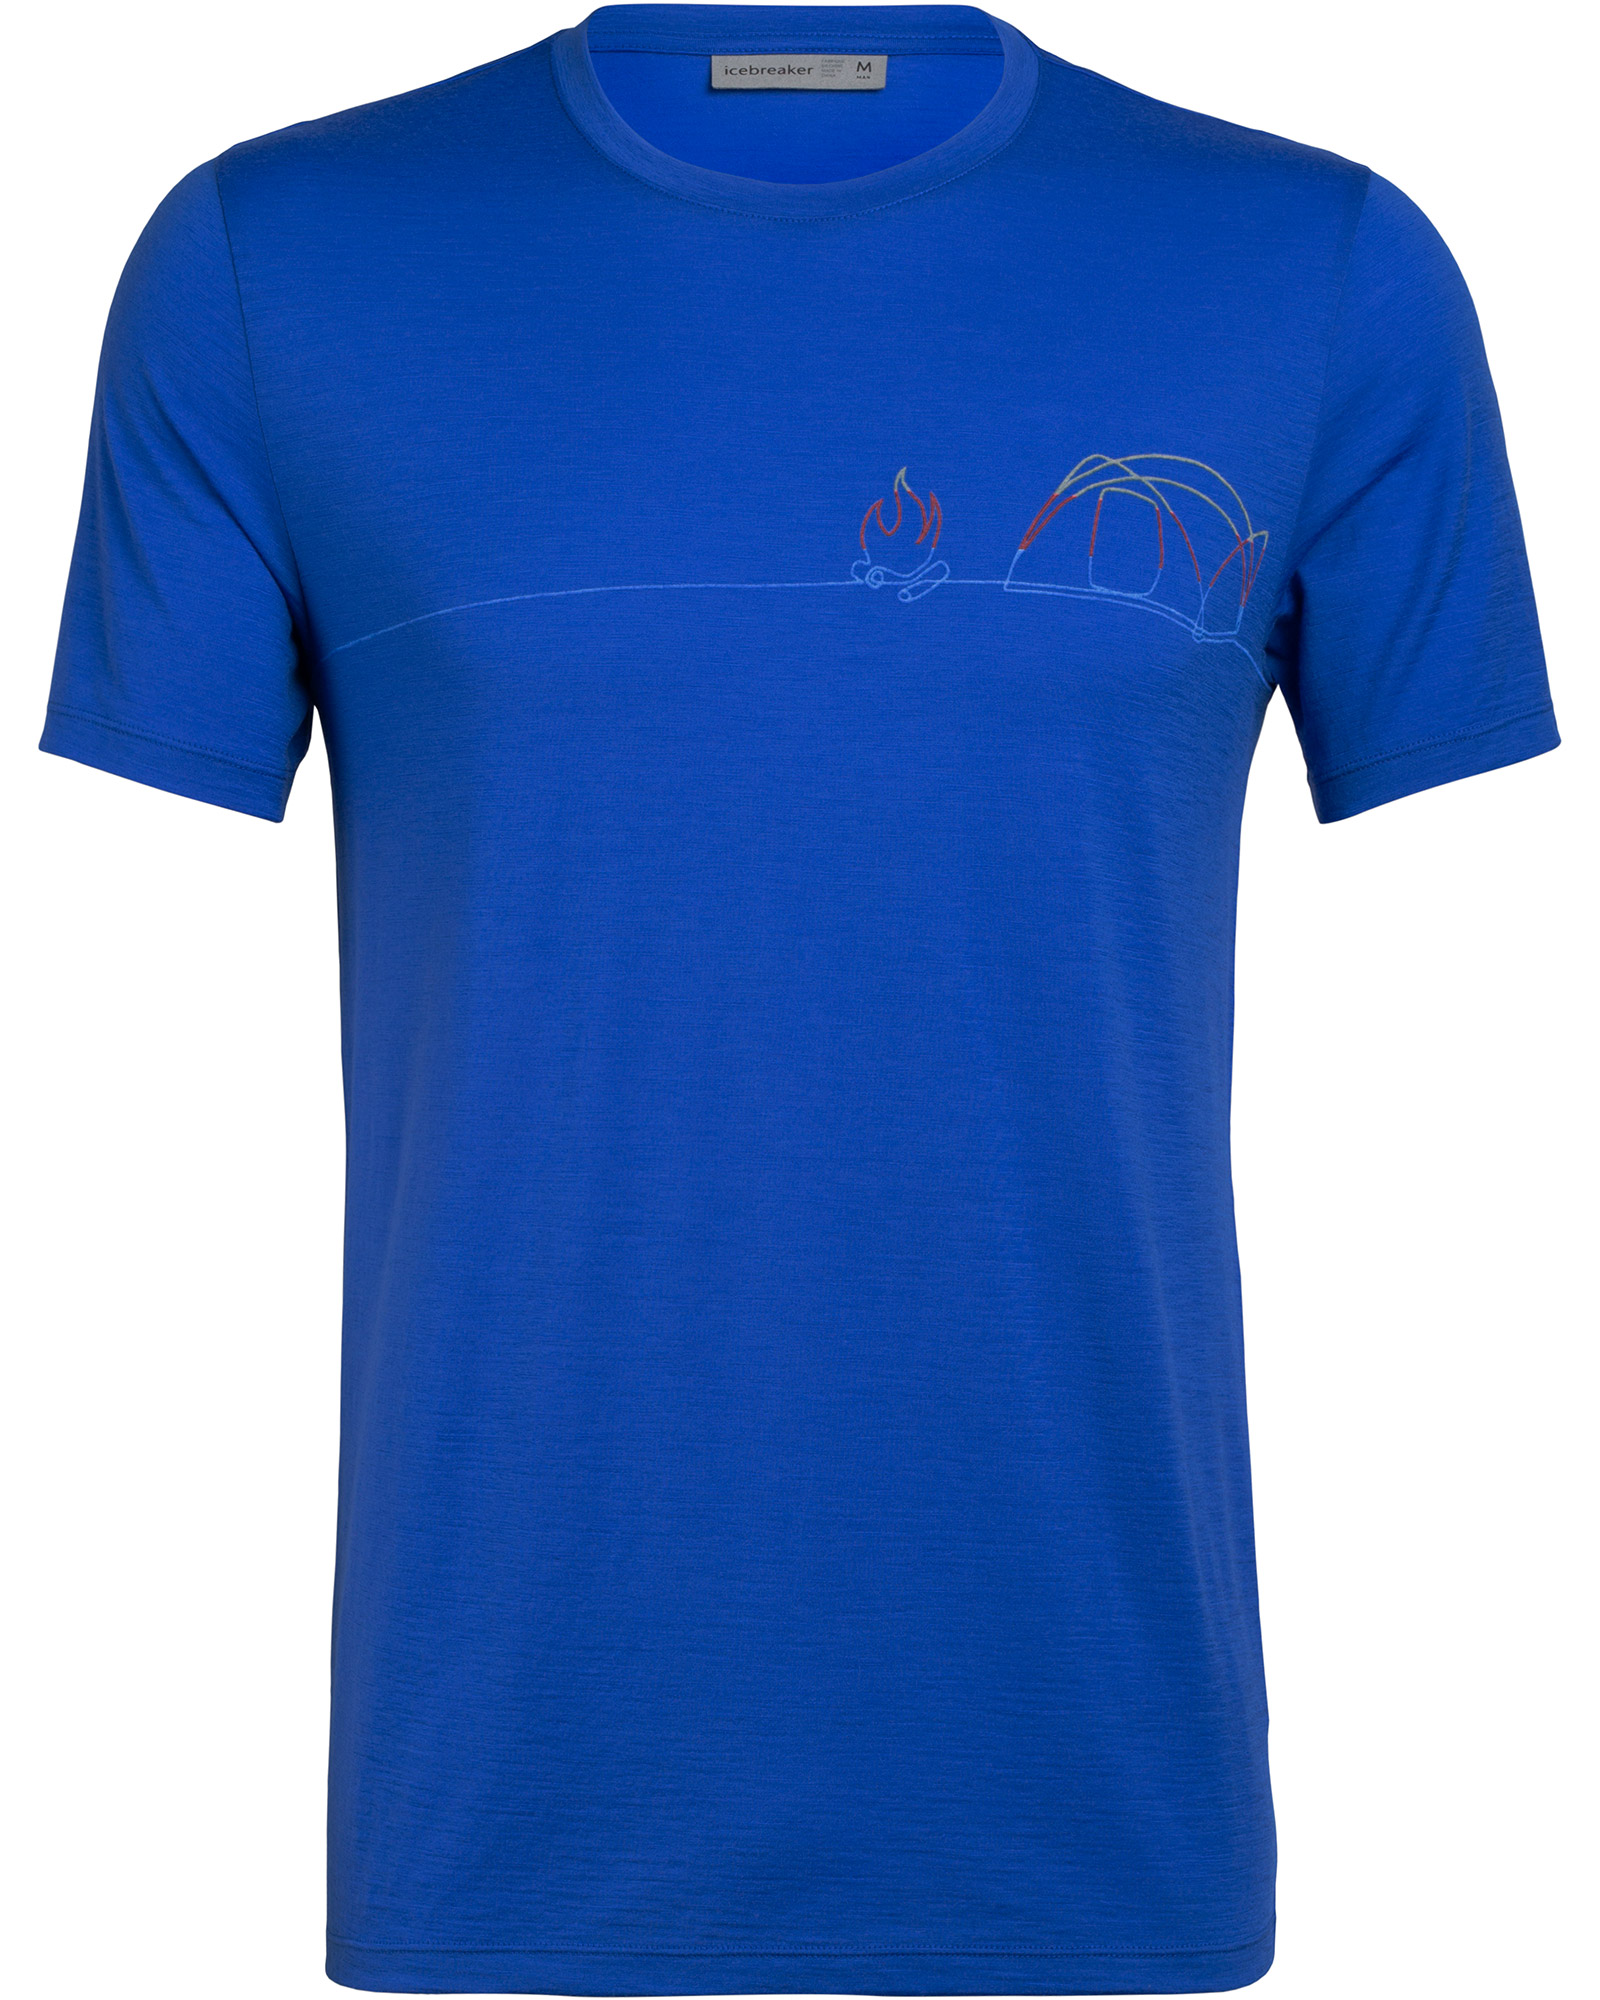 icebreaker Merino Tech Lite Graphic Men’s Crew T Shirt - Single Line Camp/Lapis Blue XL